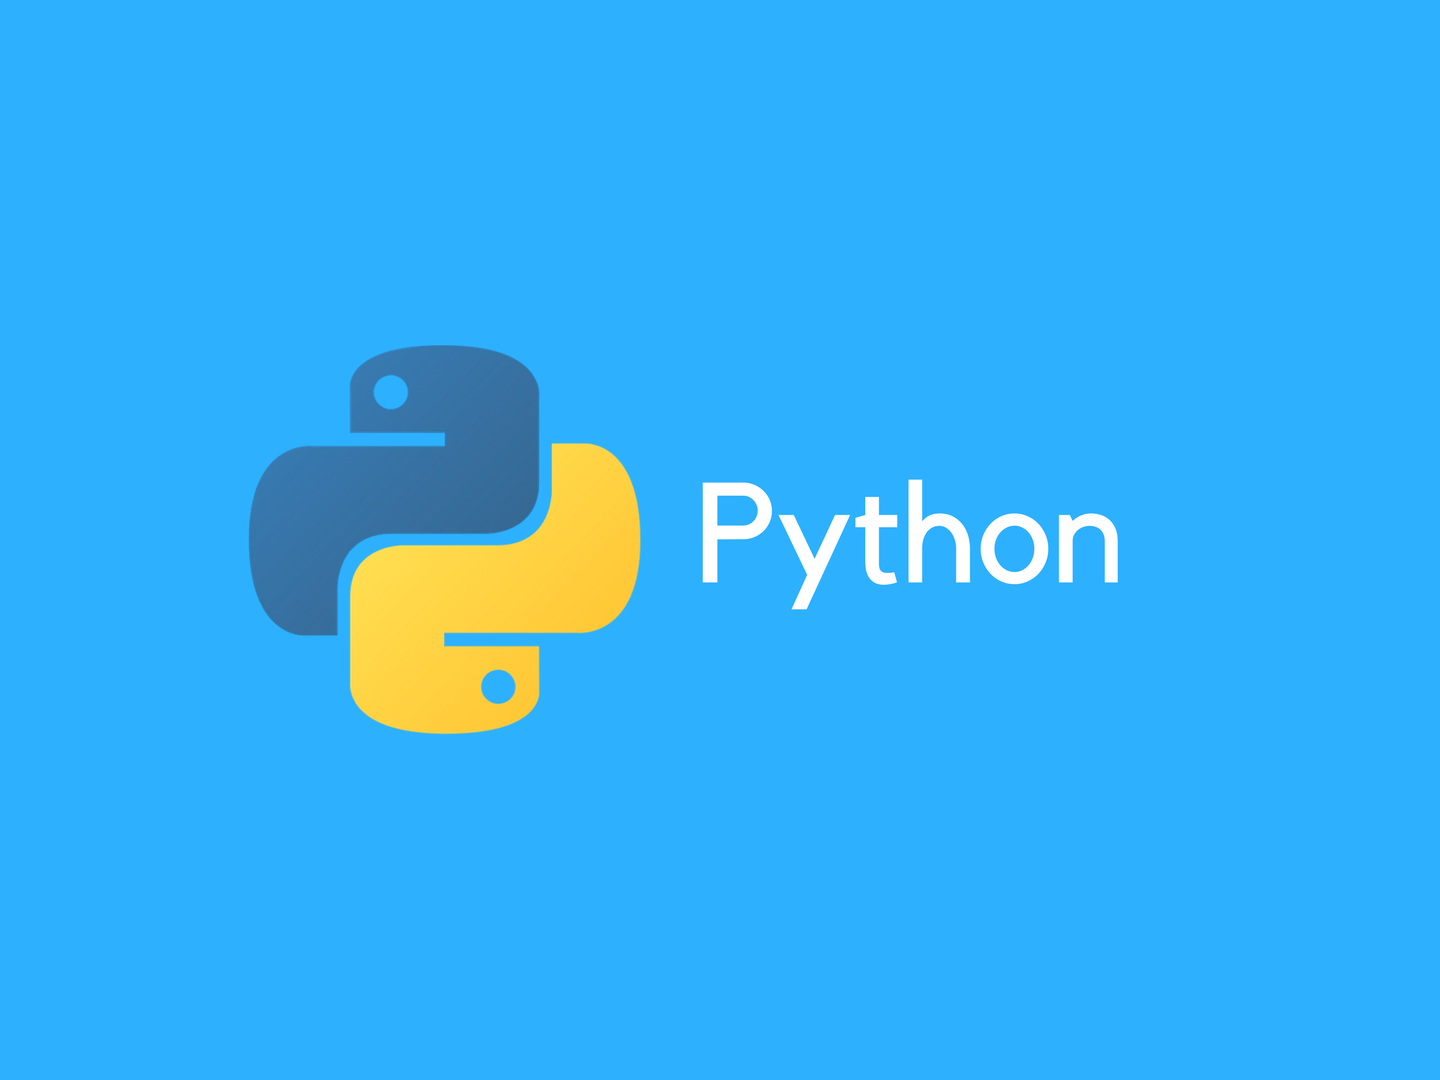 Логотип языка python. Python. Питон программирование. Python картинки. Пион язык программирования.